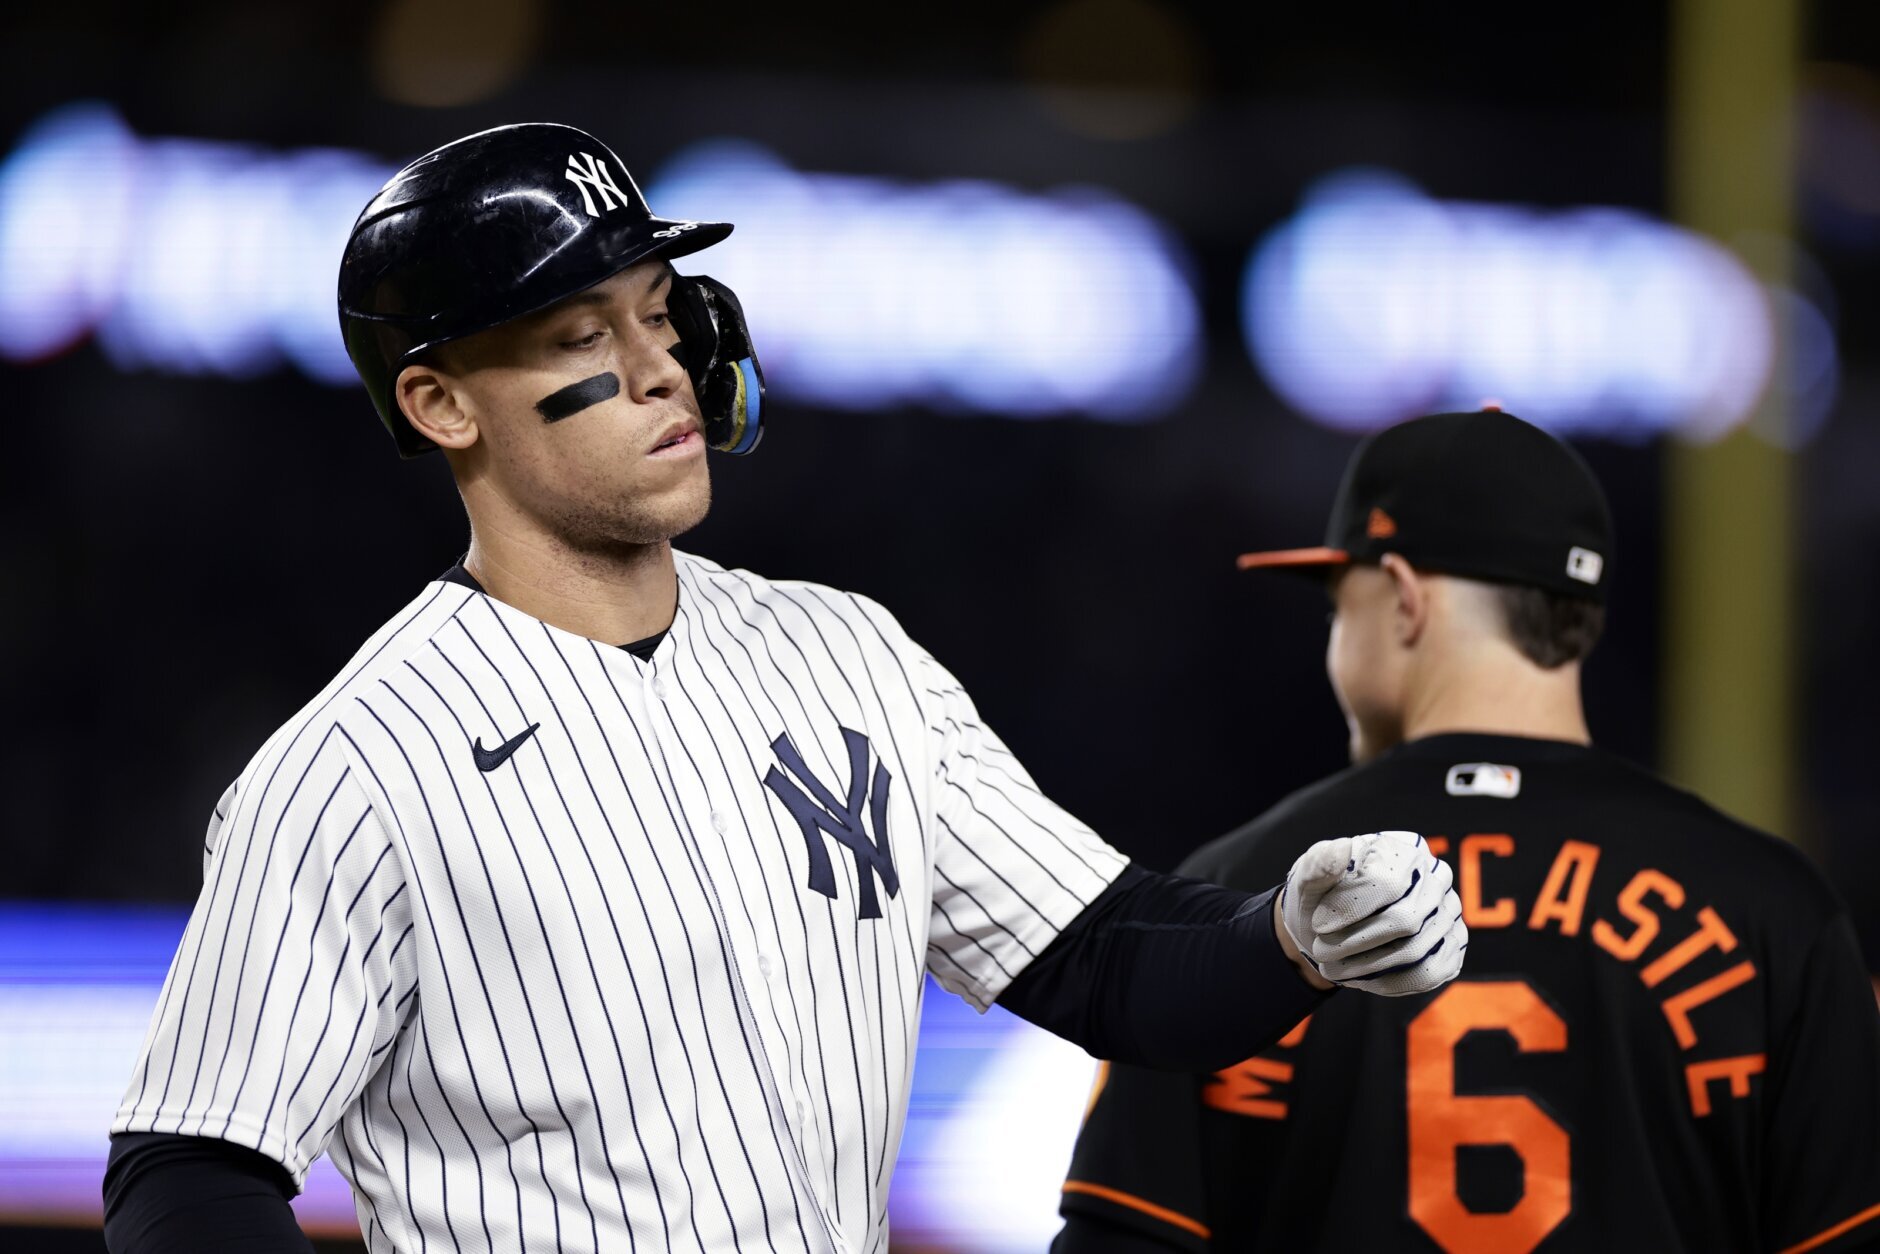 Yankees: Aaron Judge ties AL home run record at 61, Twitter reacts